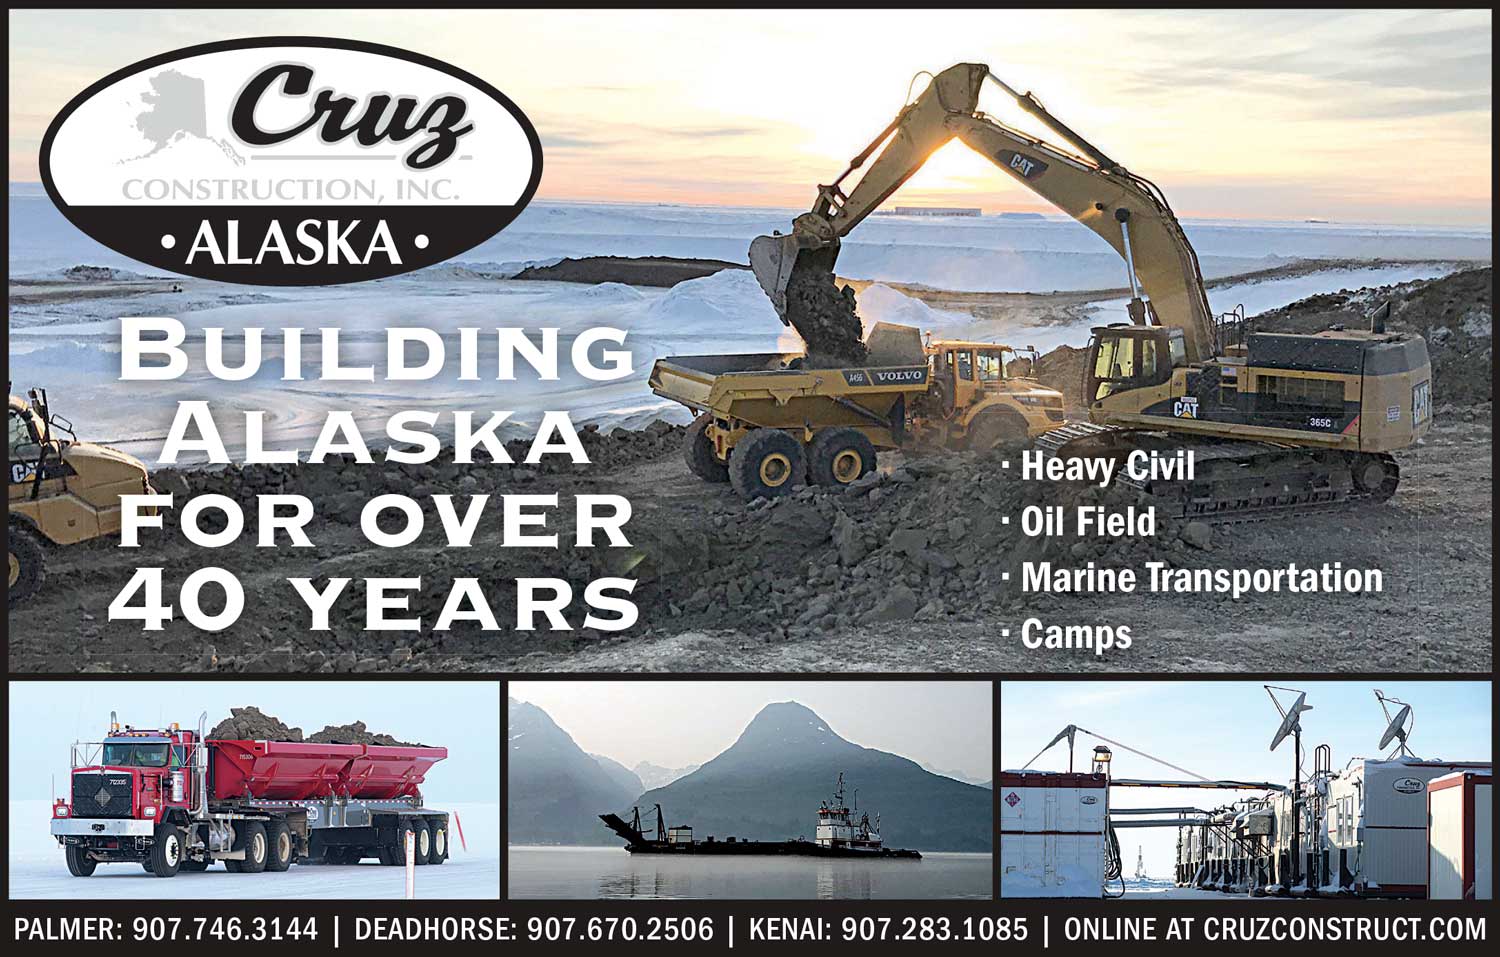 Cruz Construction, Inc. Alaska Advertisement